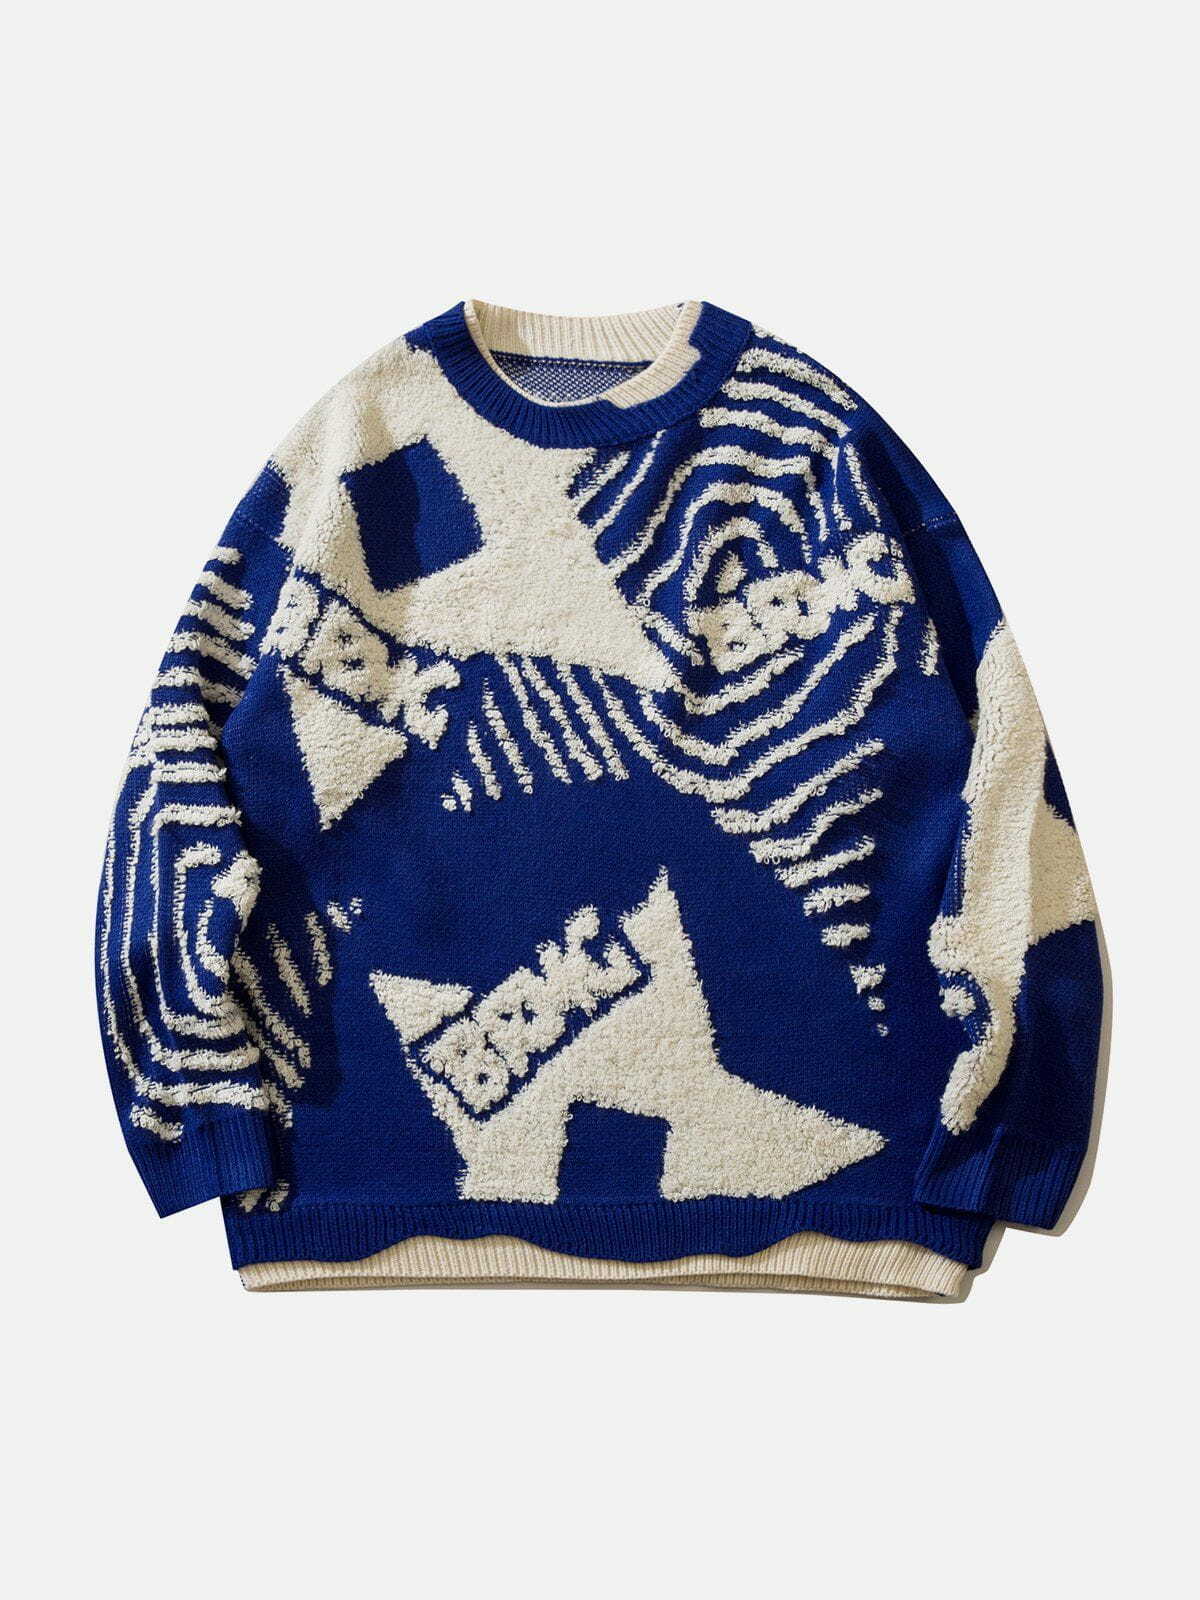 flocked patchwork sweater edgy streetwear statement 4322